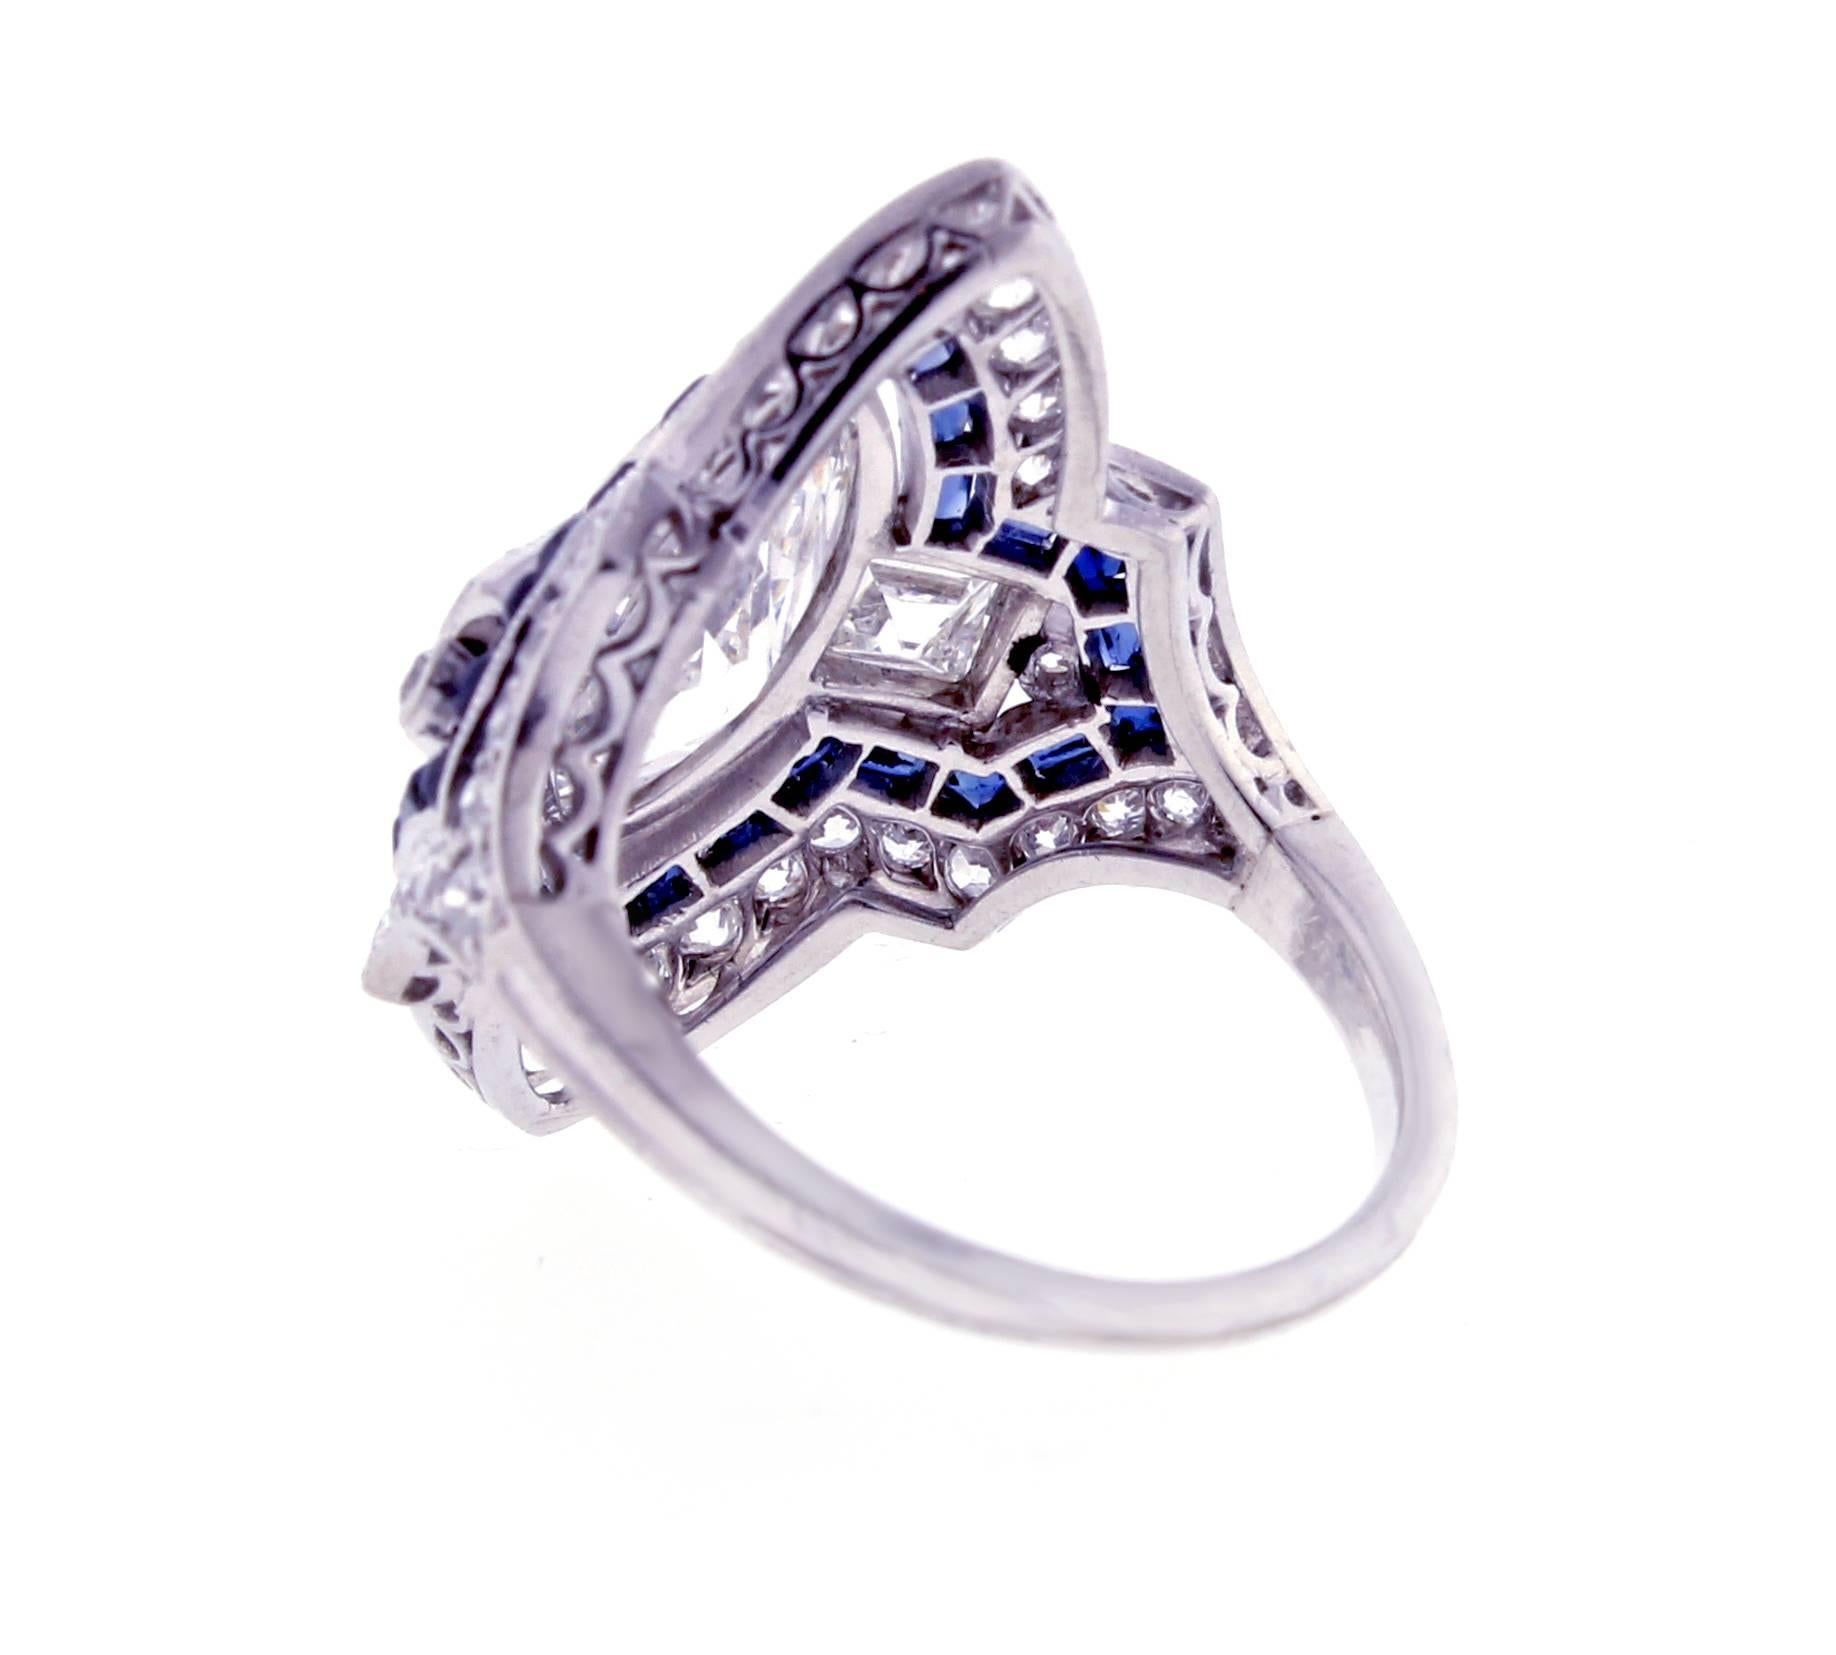 Women's Art Deco Marquise Diamond and Sapphire Ring